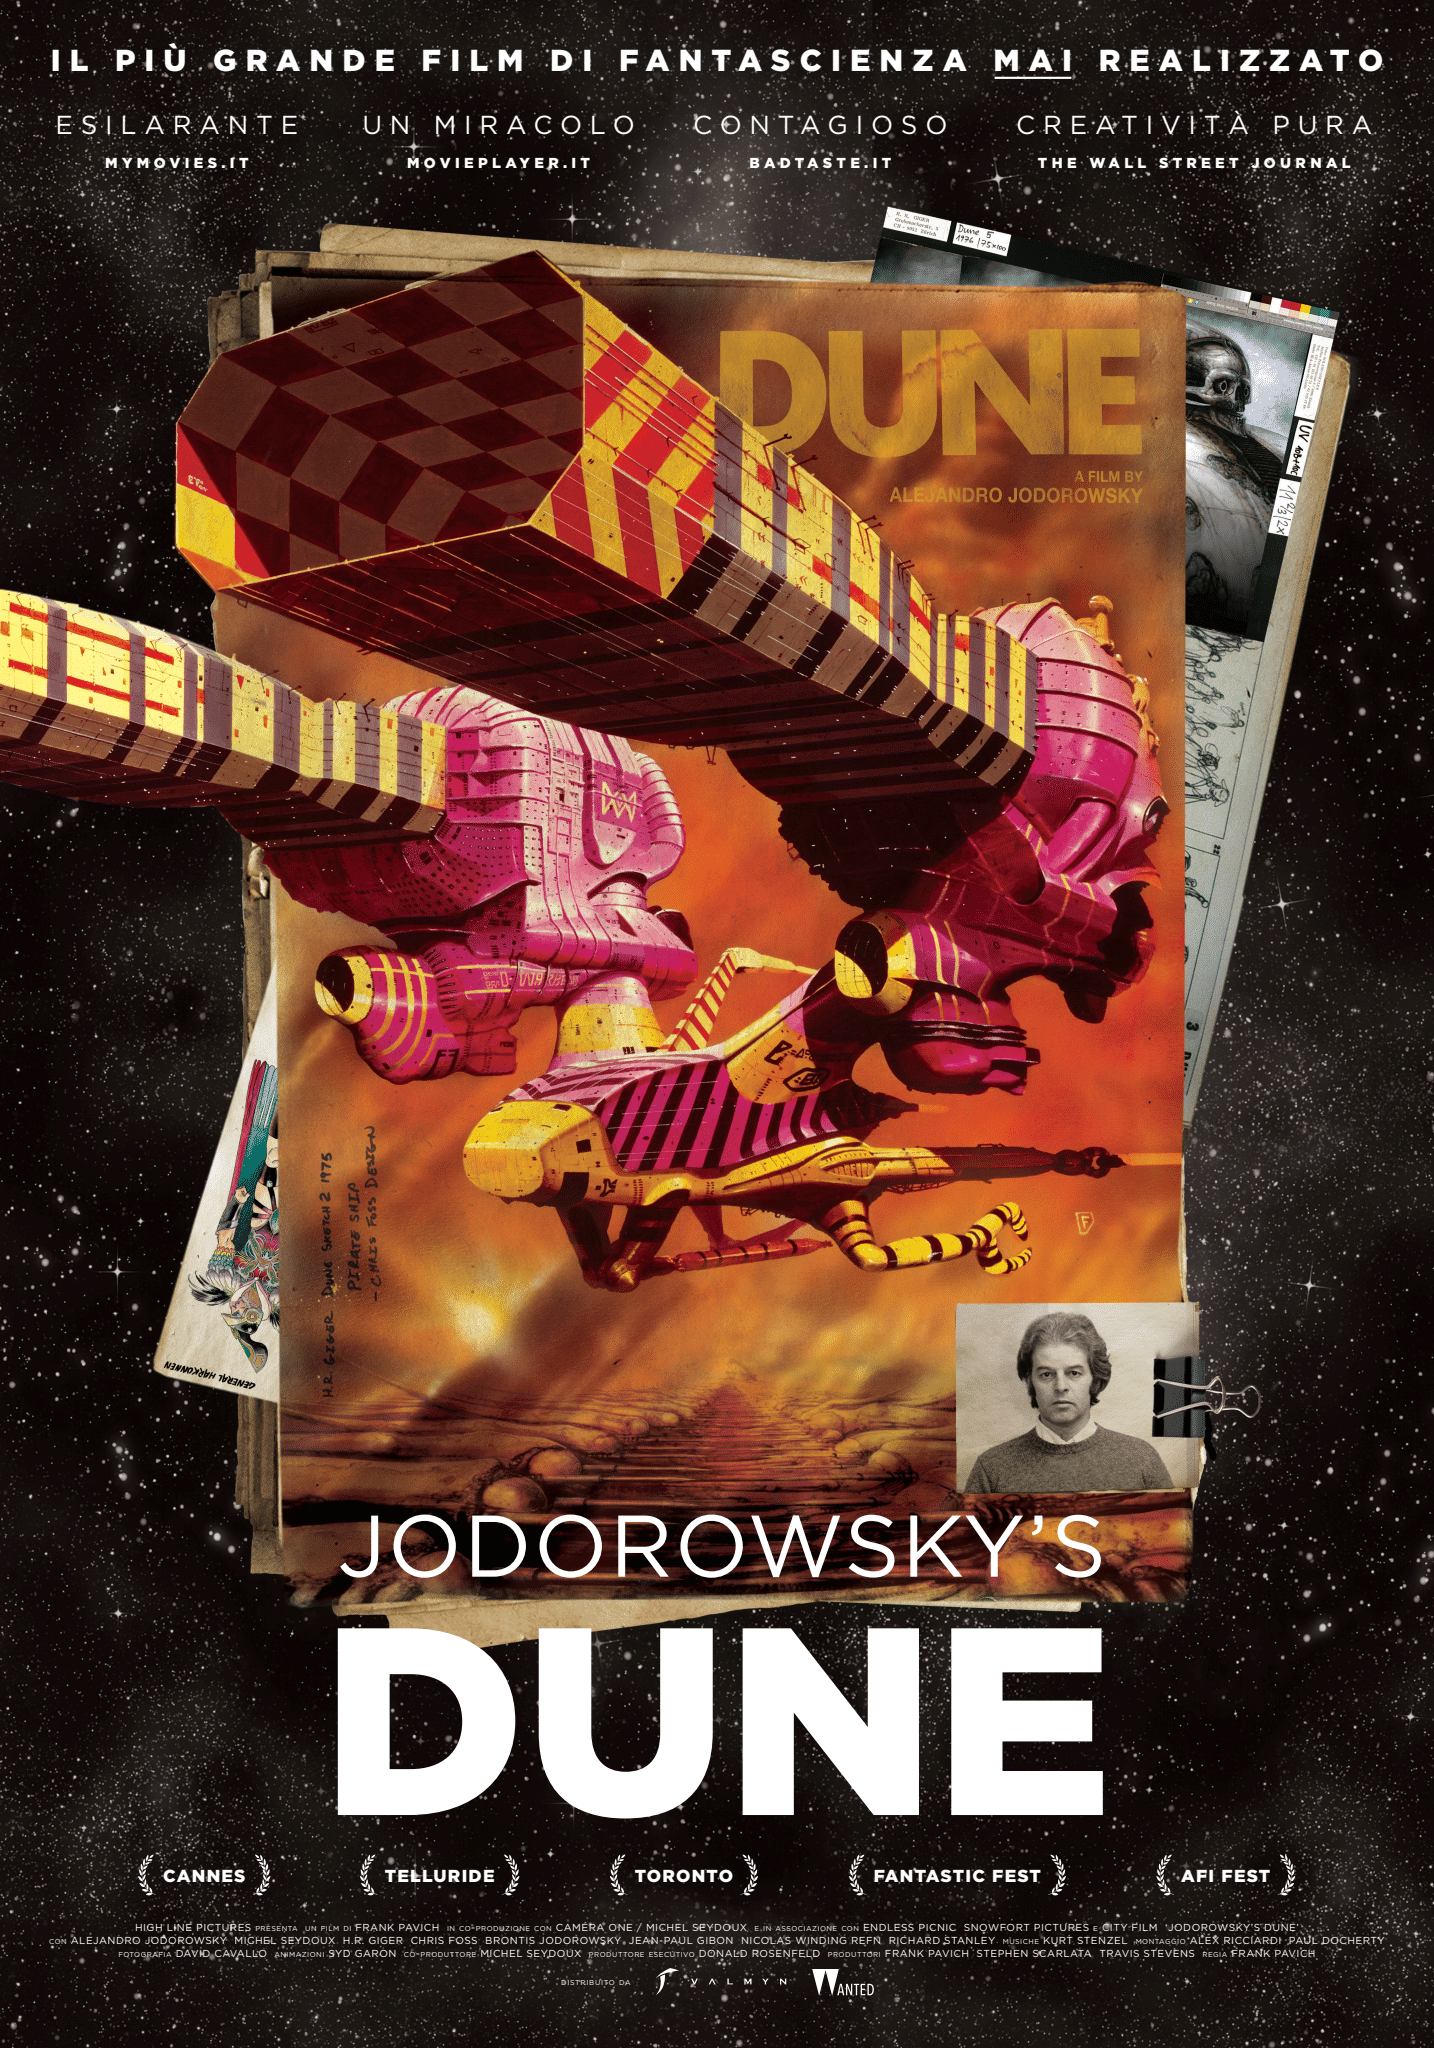 [NEWS] Il trailer del documentario Jodorowsky’s Dune